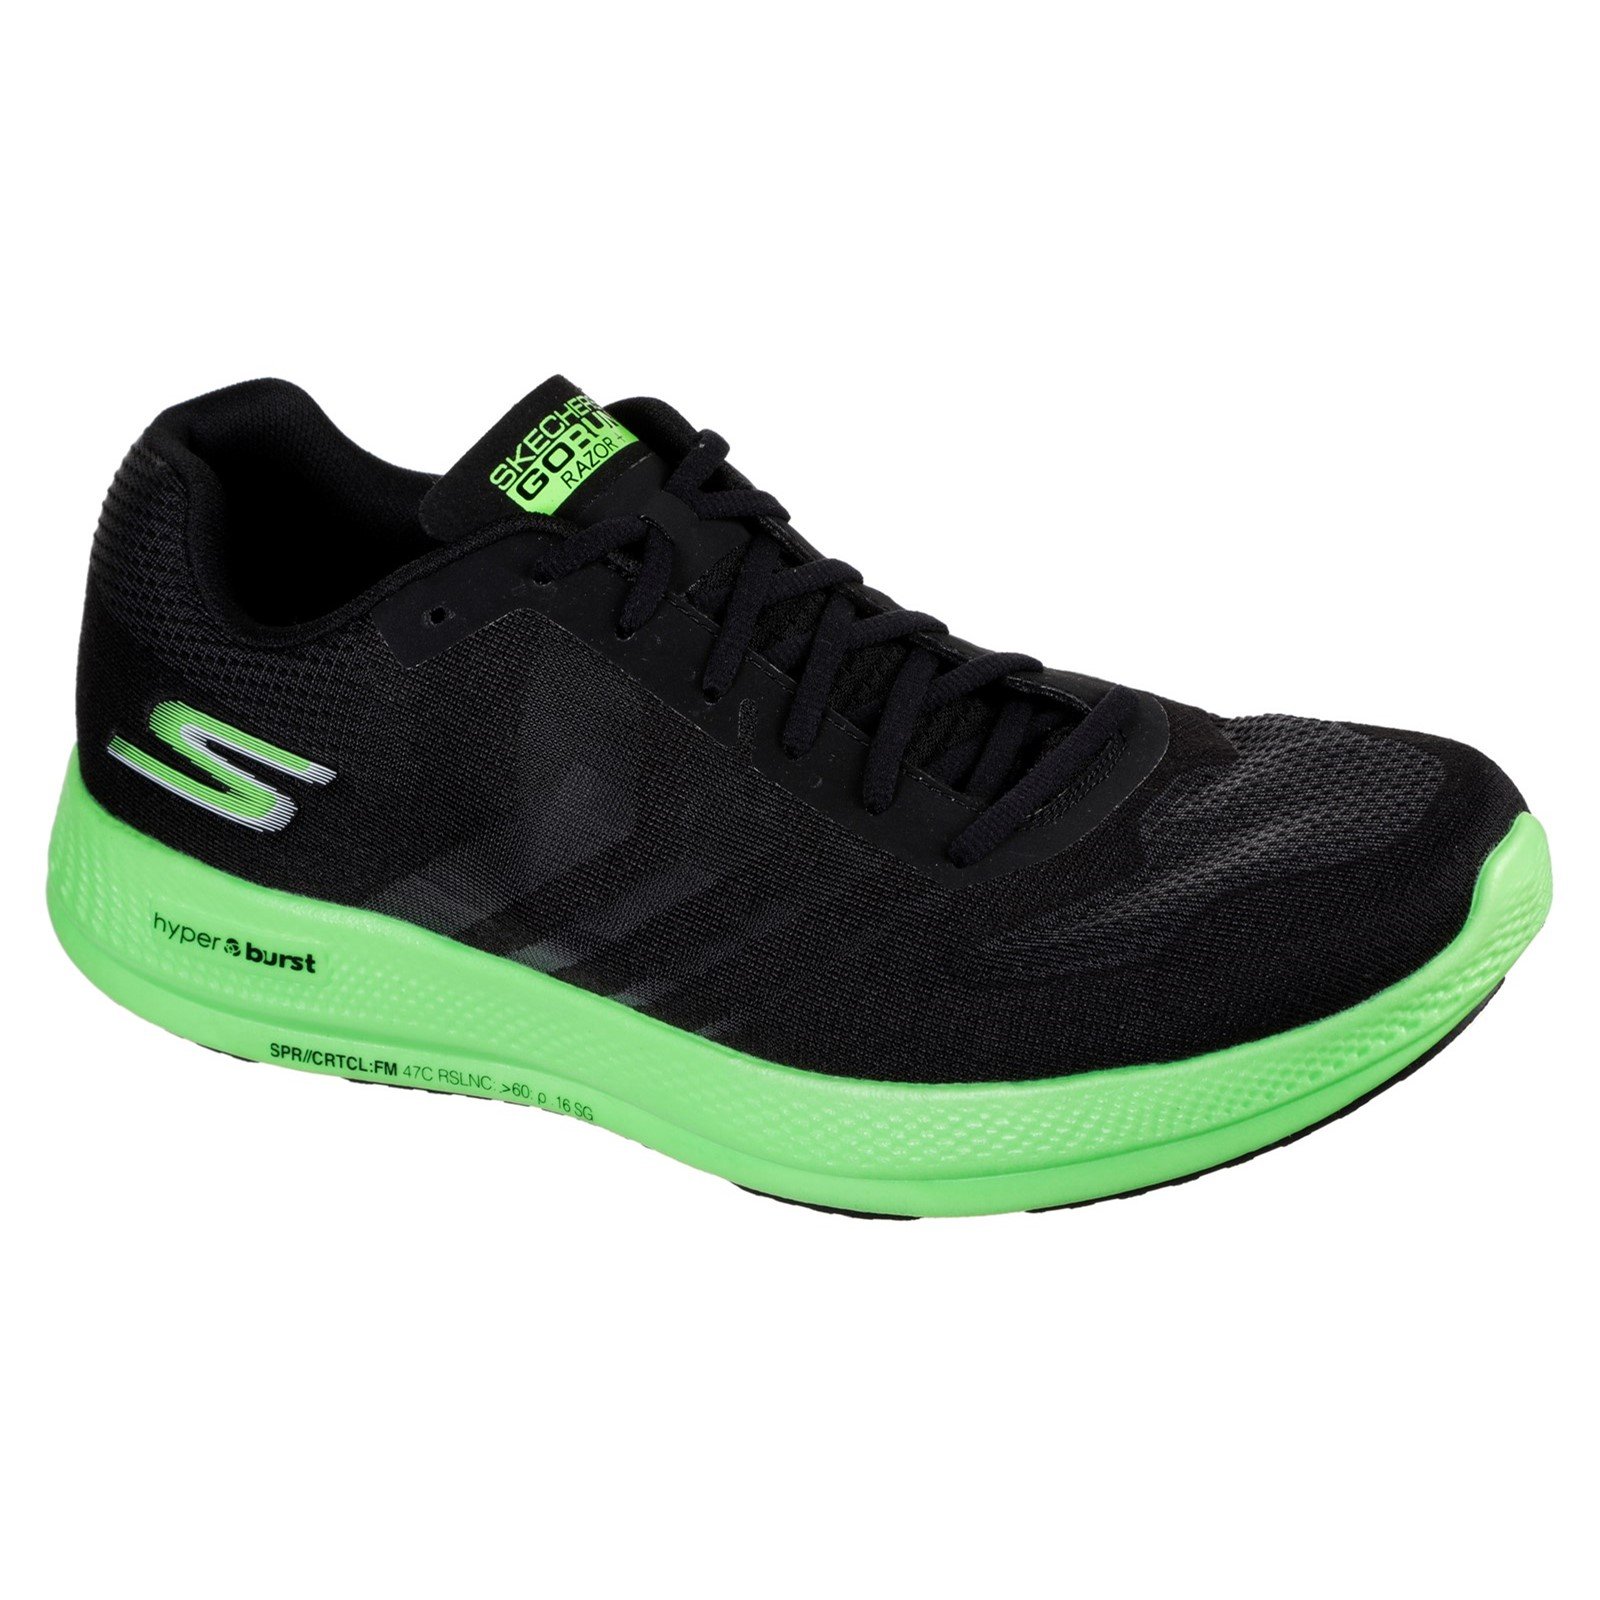 Skechers Men's Go Run Razor Trainer Multicolor 32699 - Black/Green 9